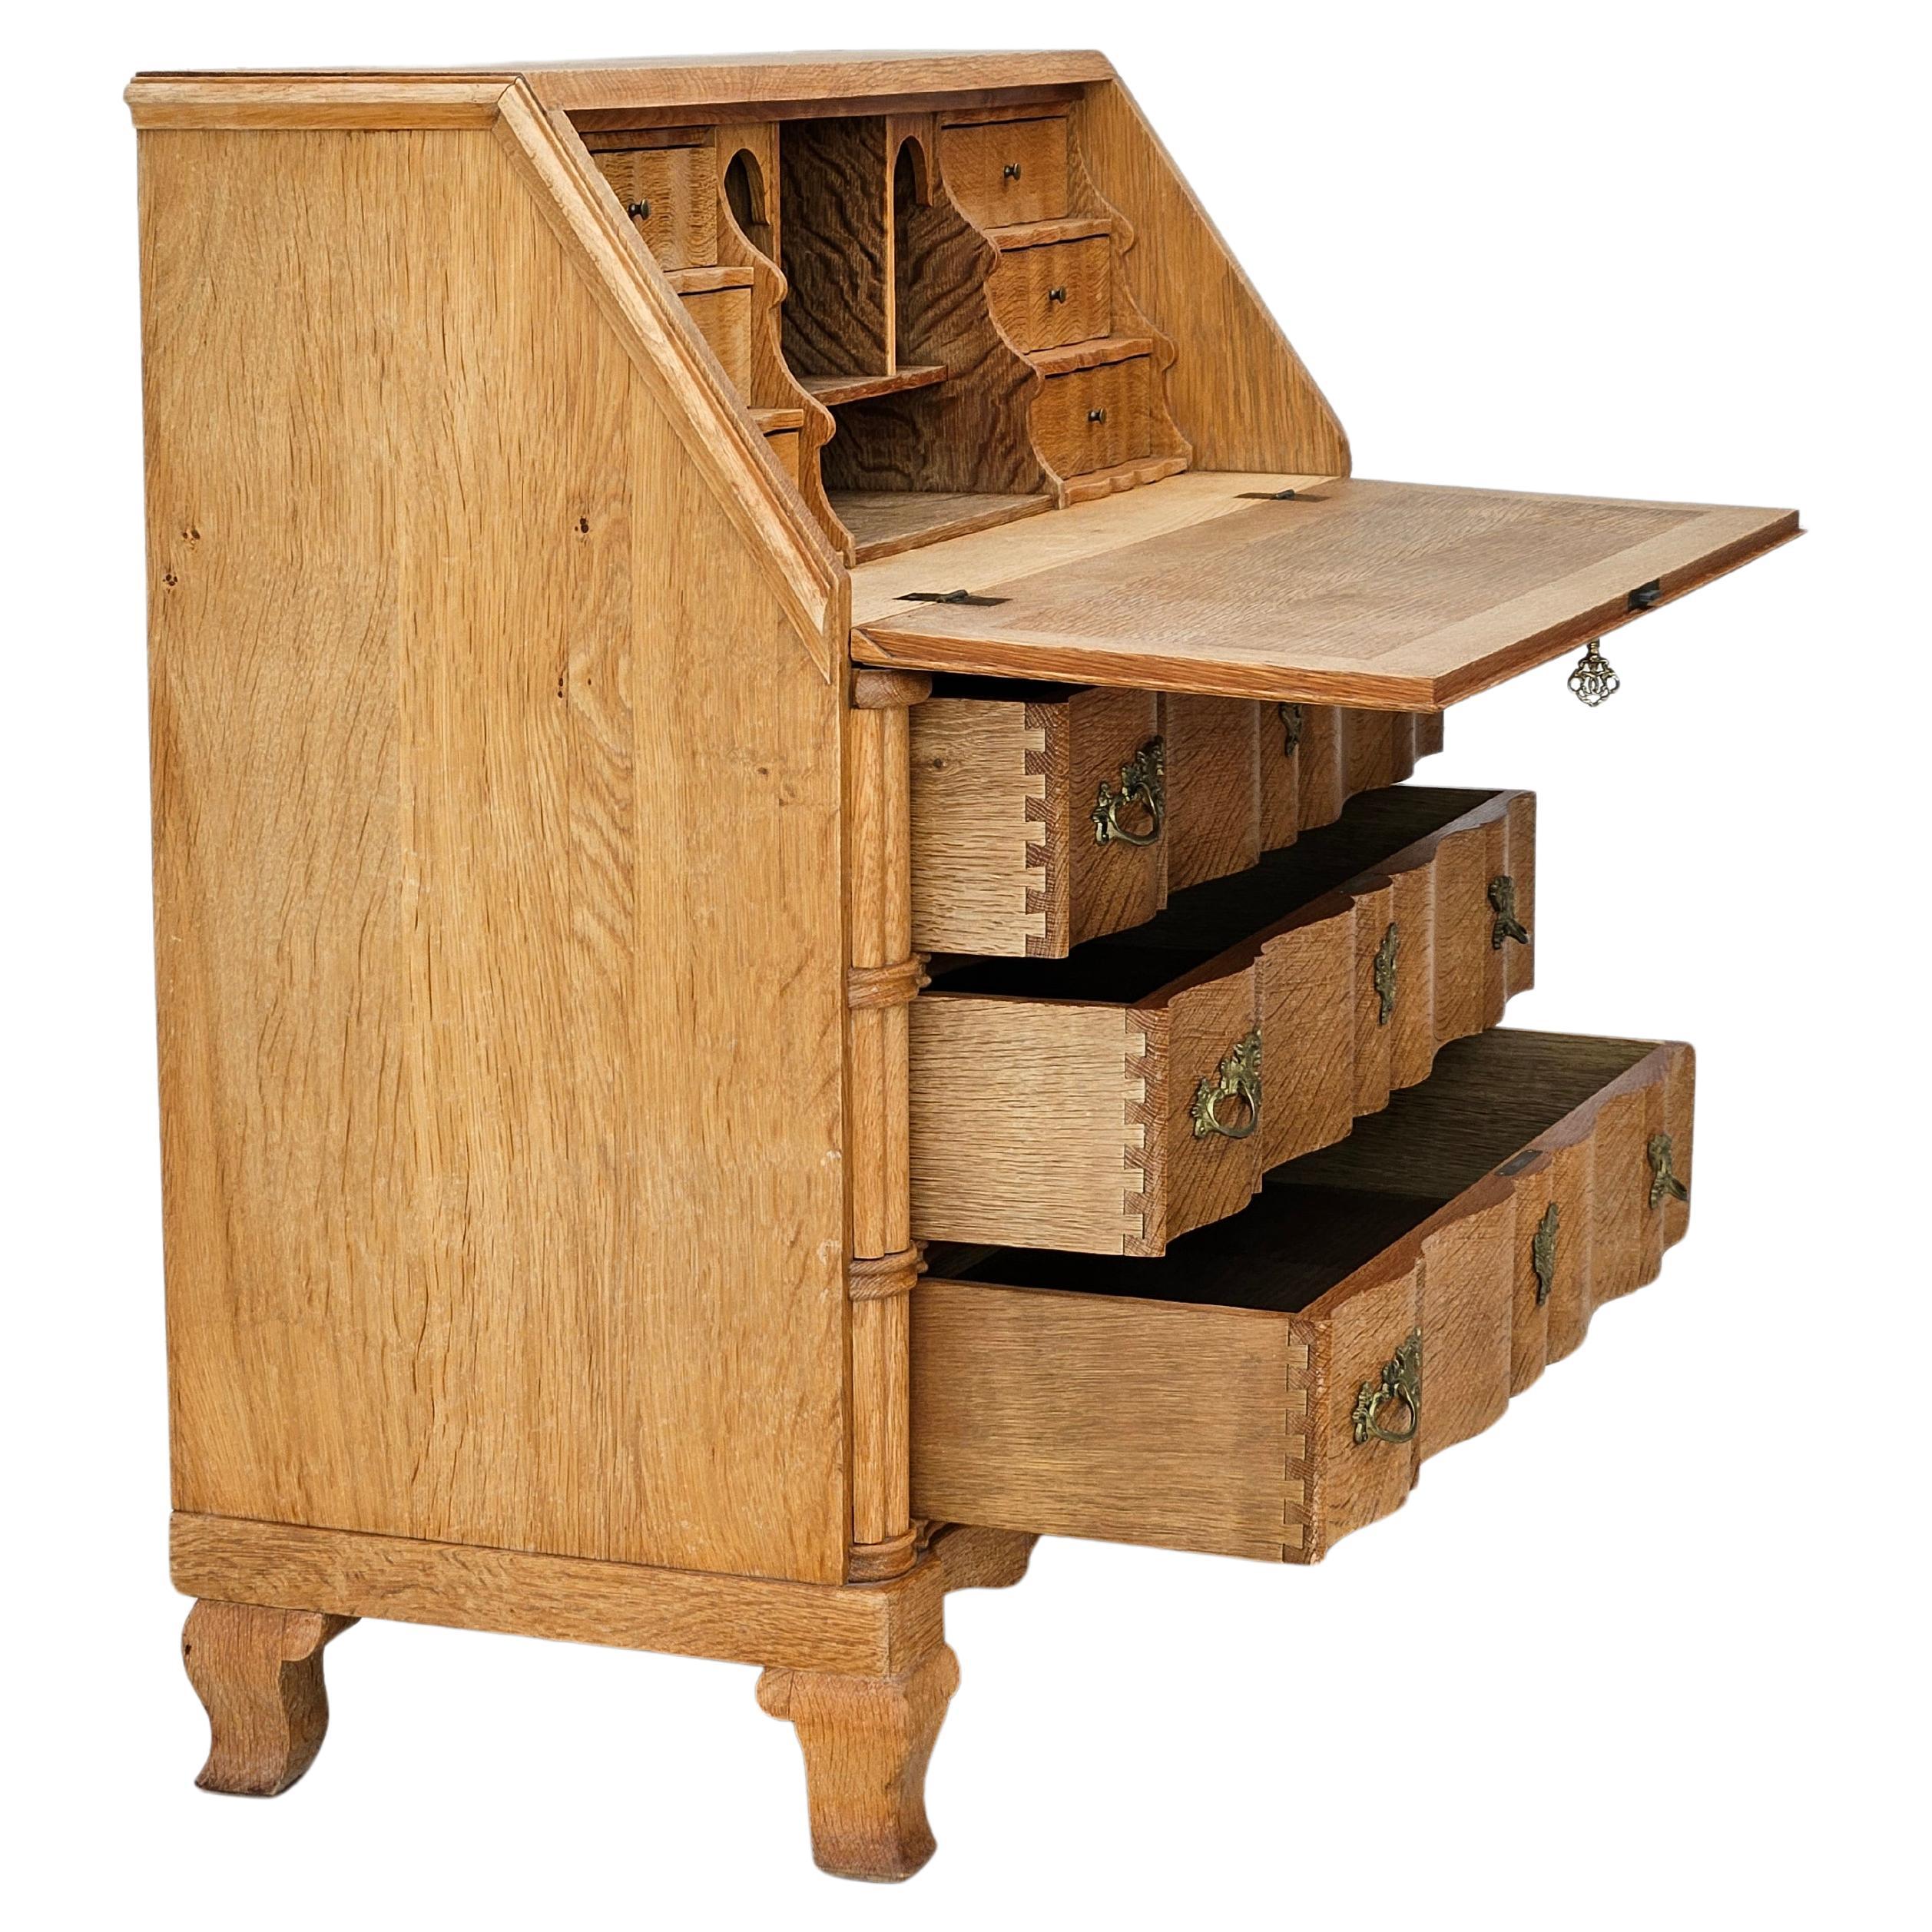 1970s, Danish chest of drawers, oak wood, original condition.